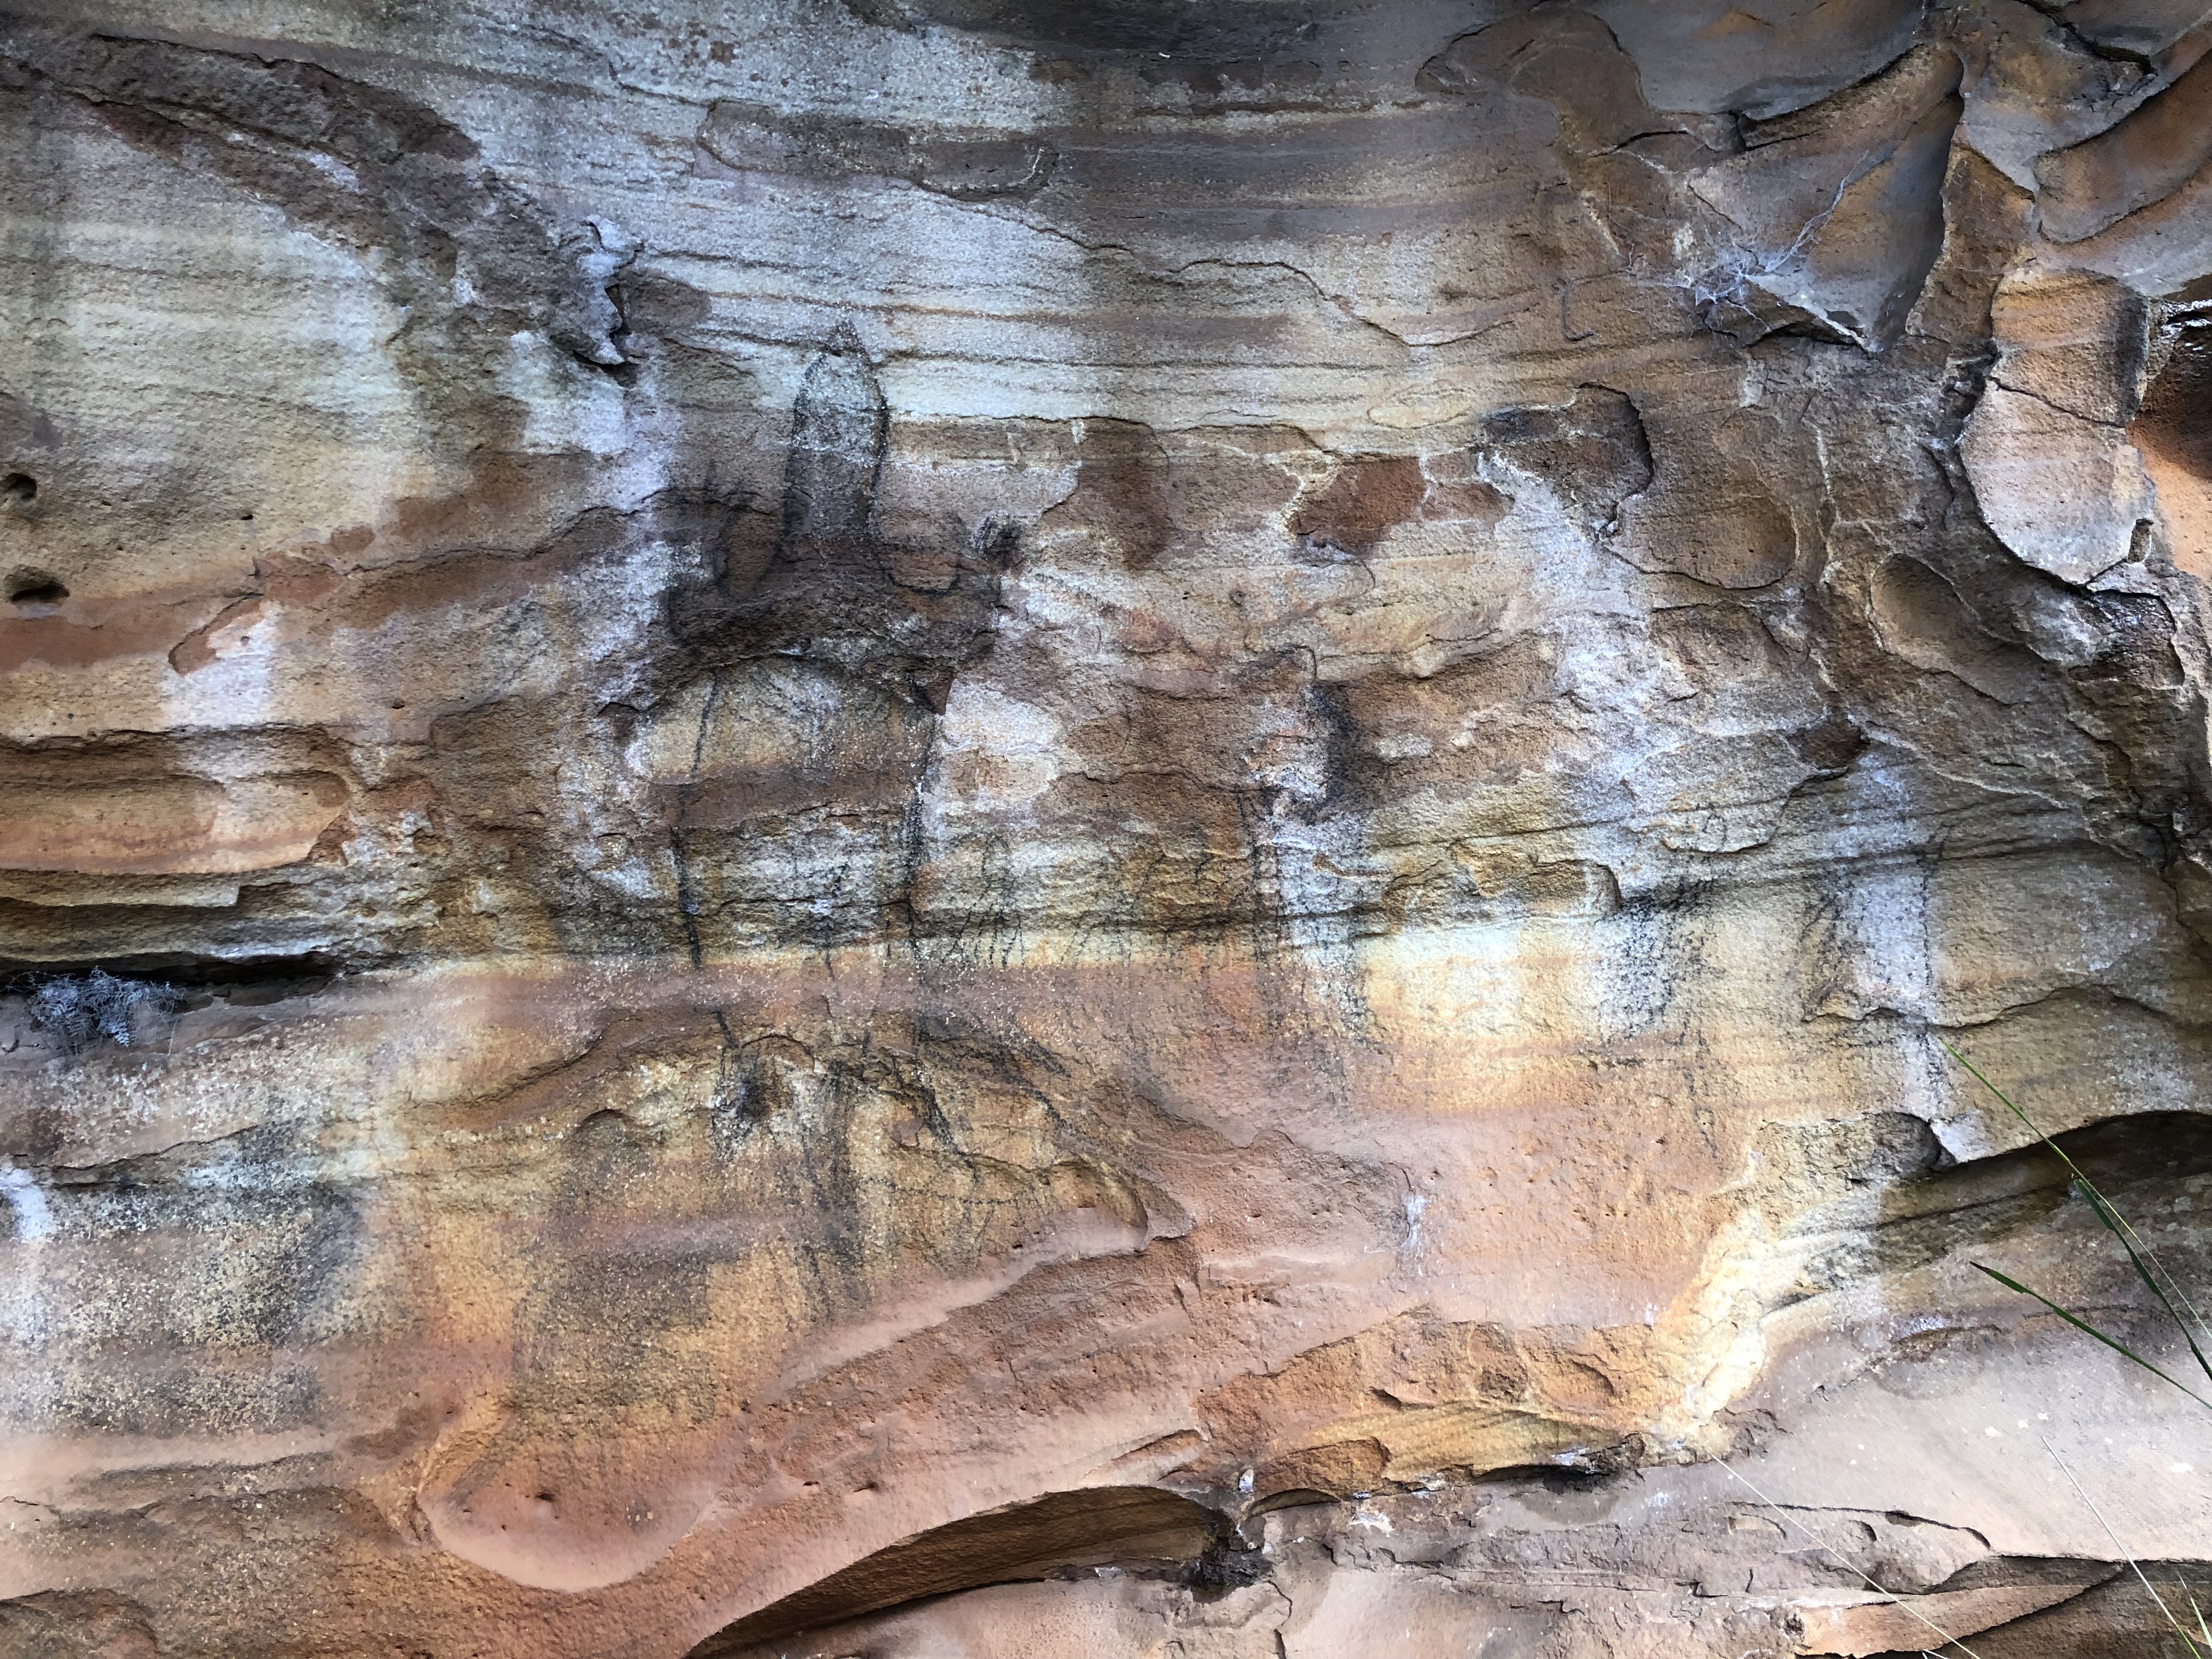 Aboriginal artwork on rock face 